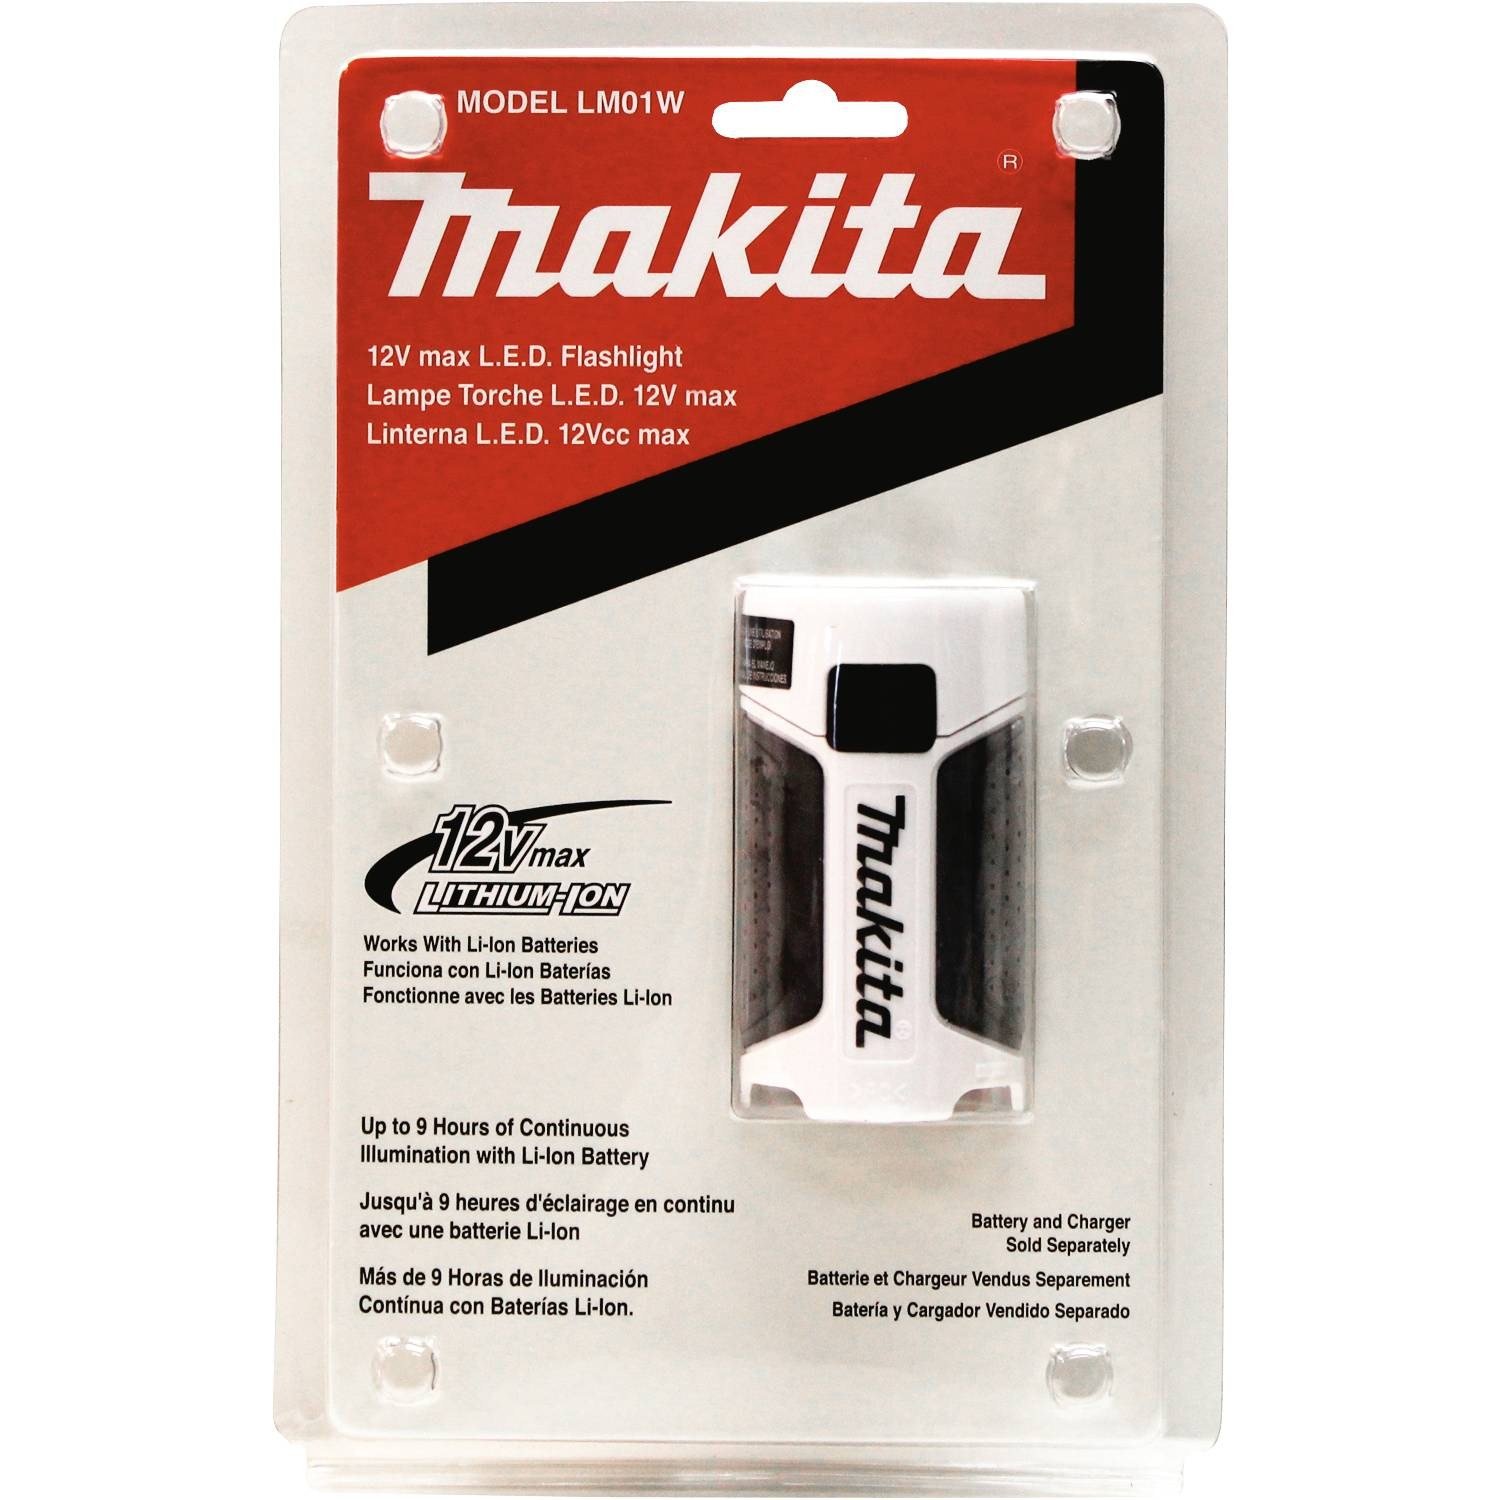 Makita LM01W 12V max Lithium-Ion L.E.D. Flashlight, Flashlight Only